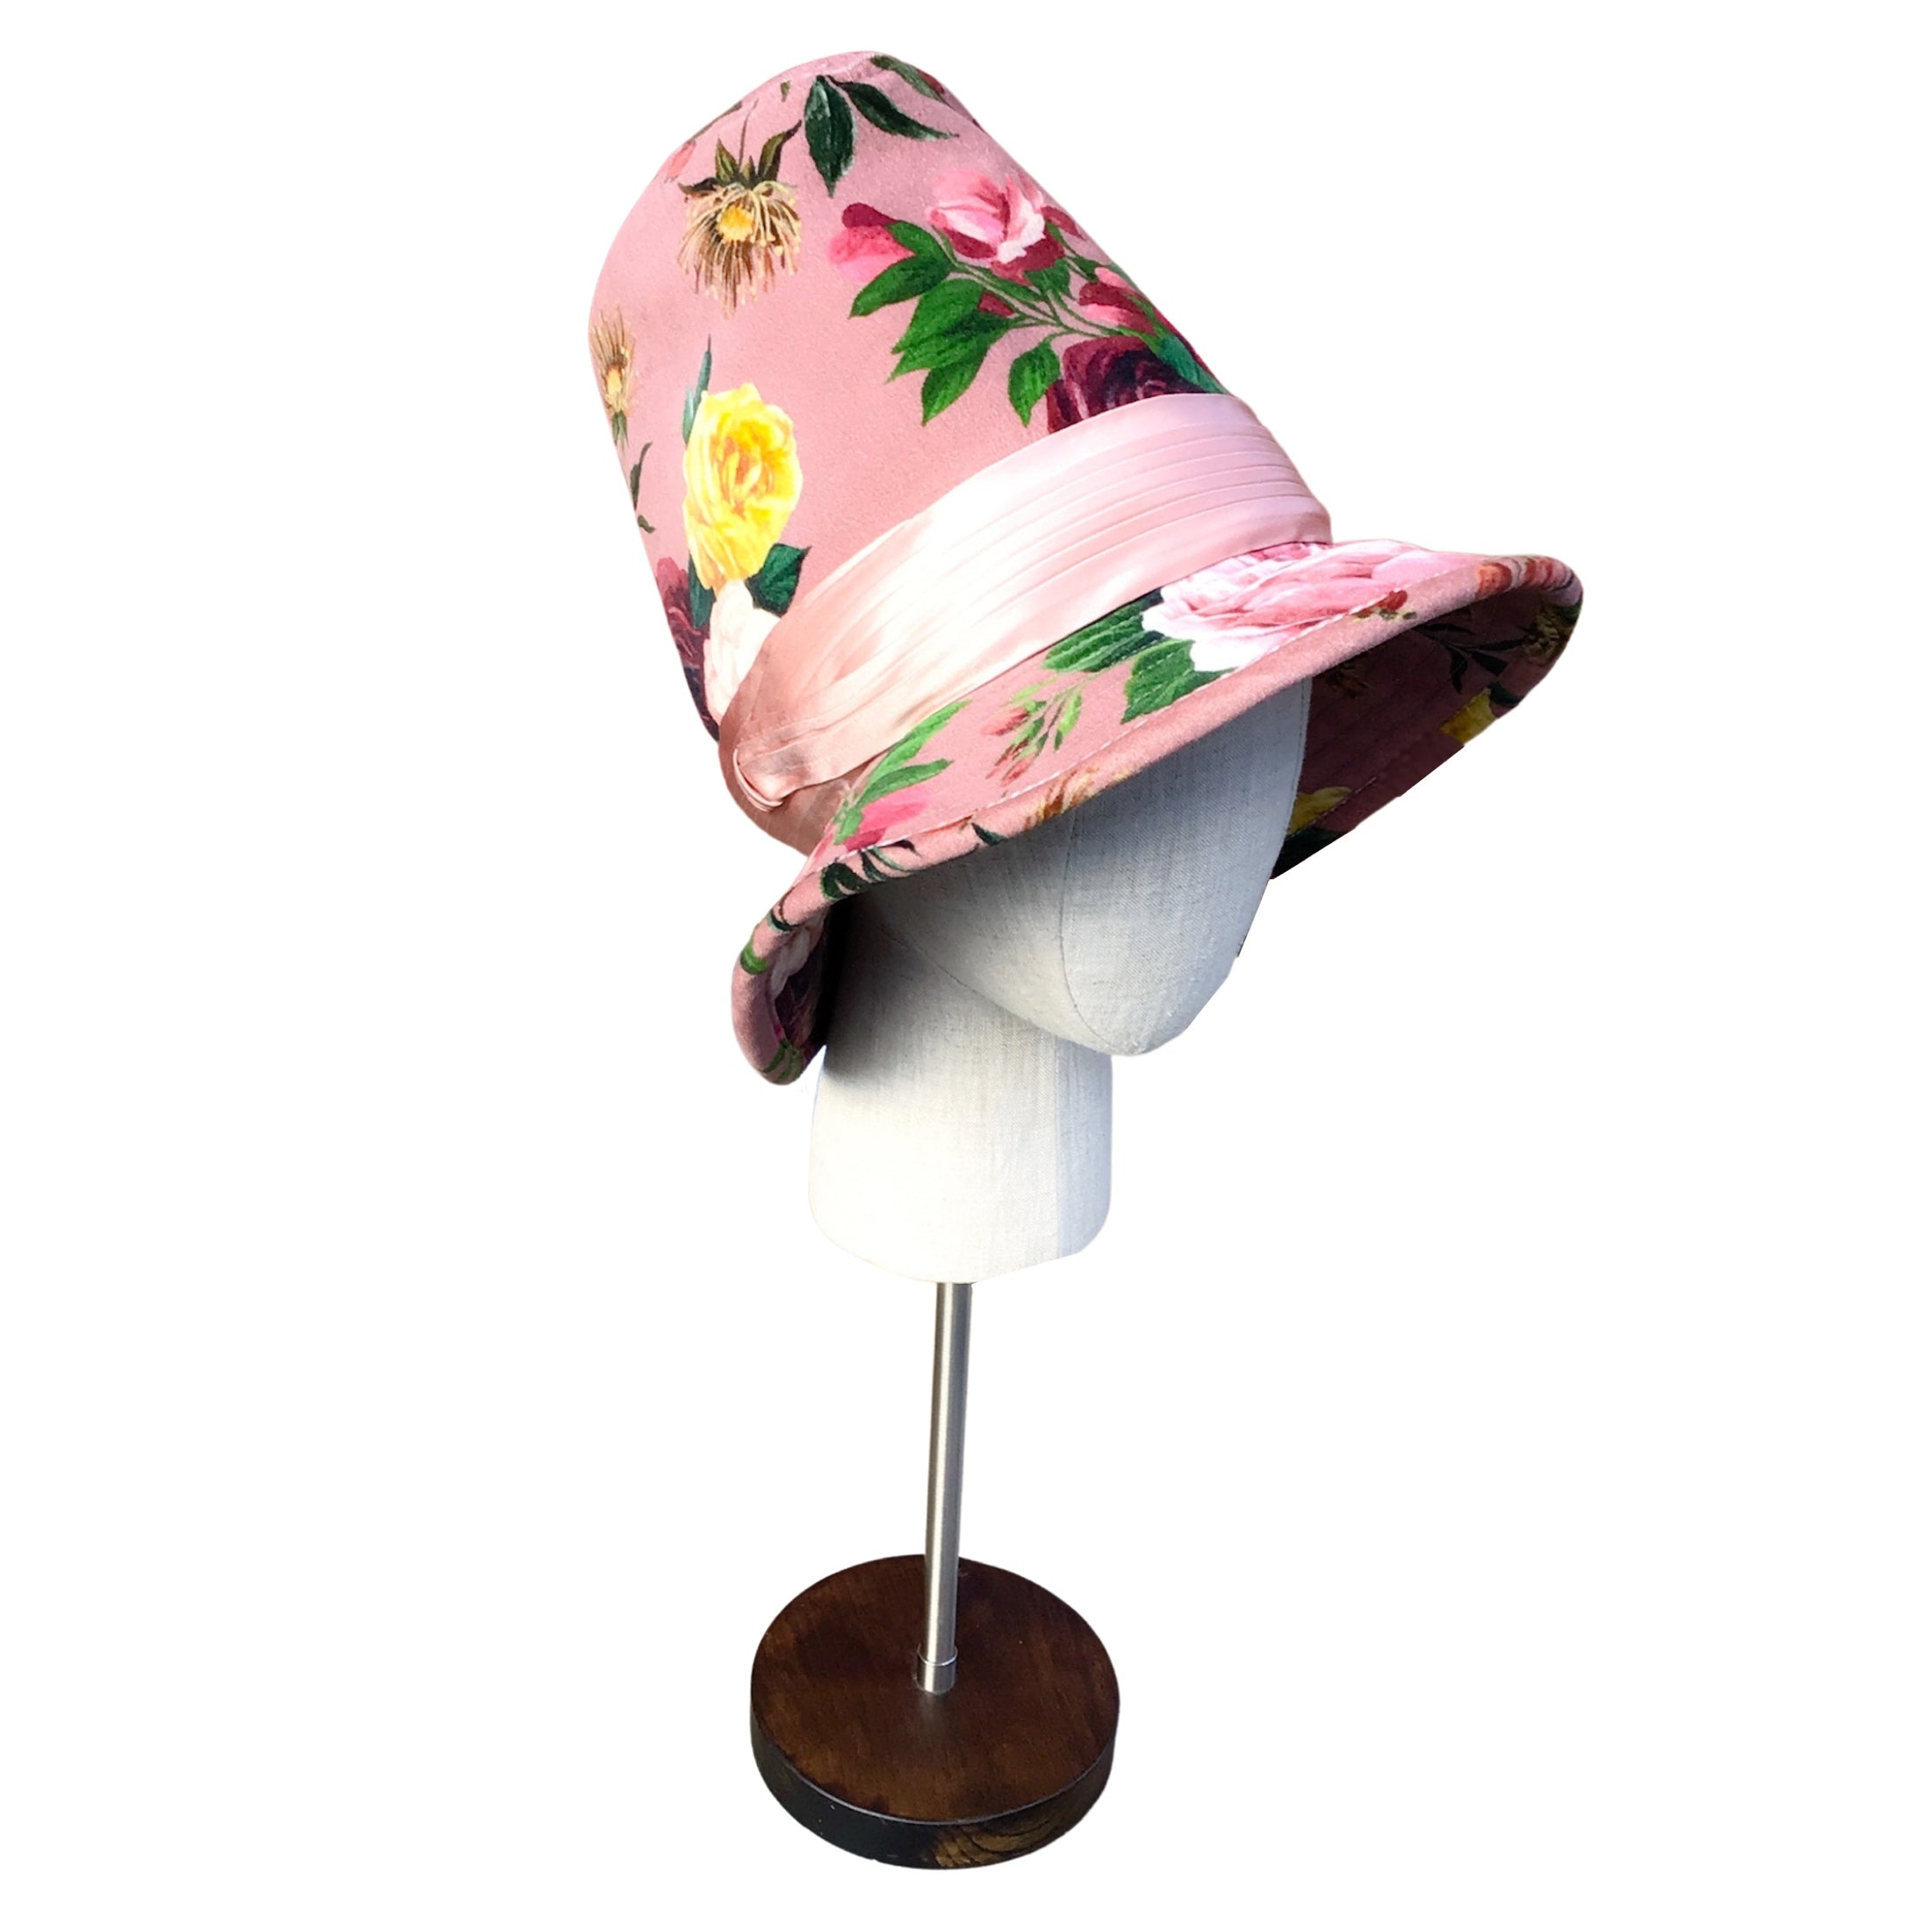 Dolce & Gabbana Pink Multi Velvet Floral Bucket Hat